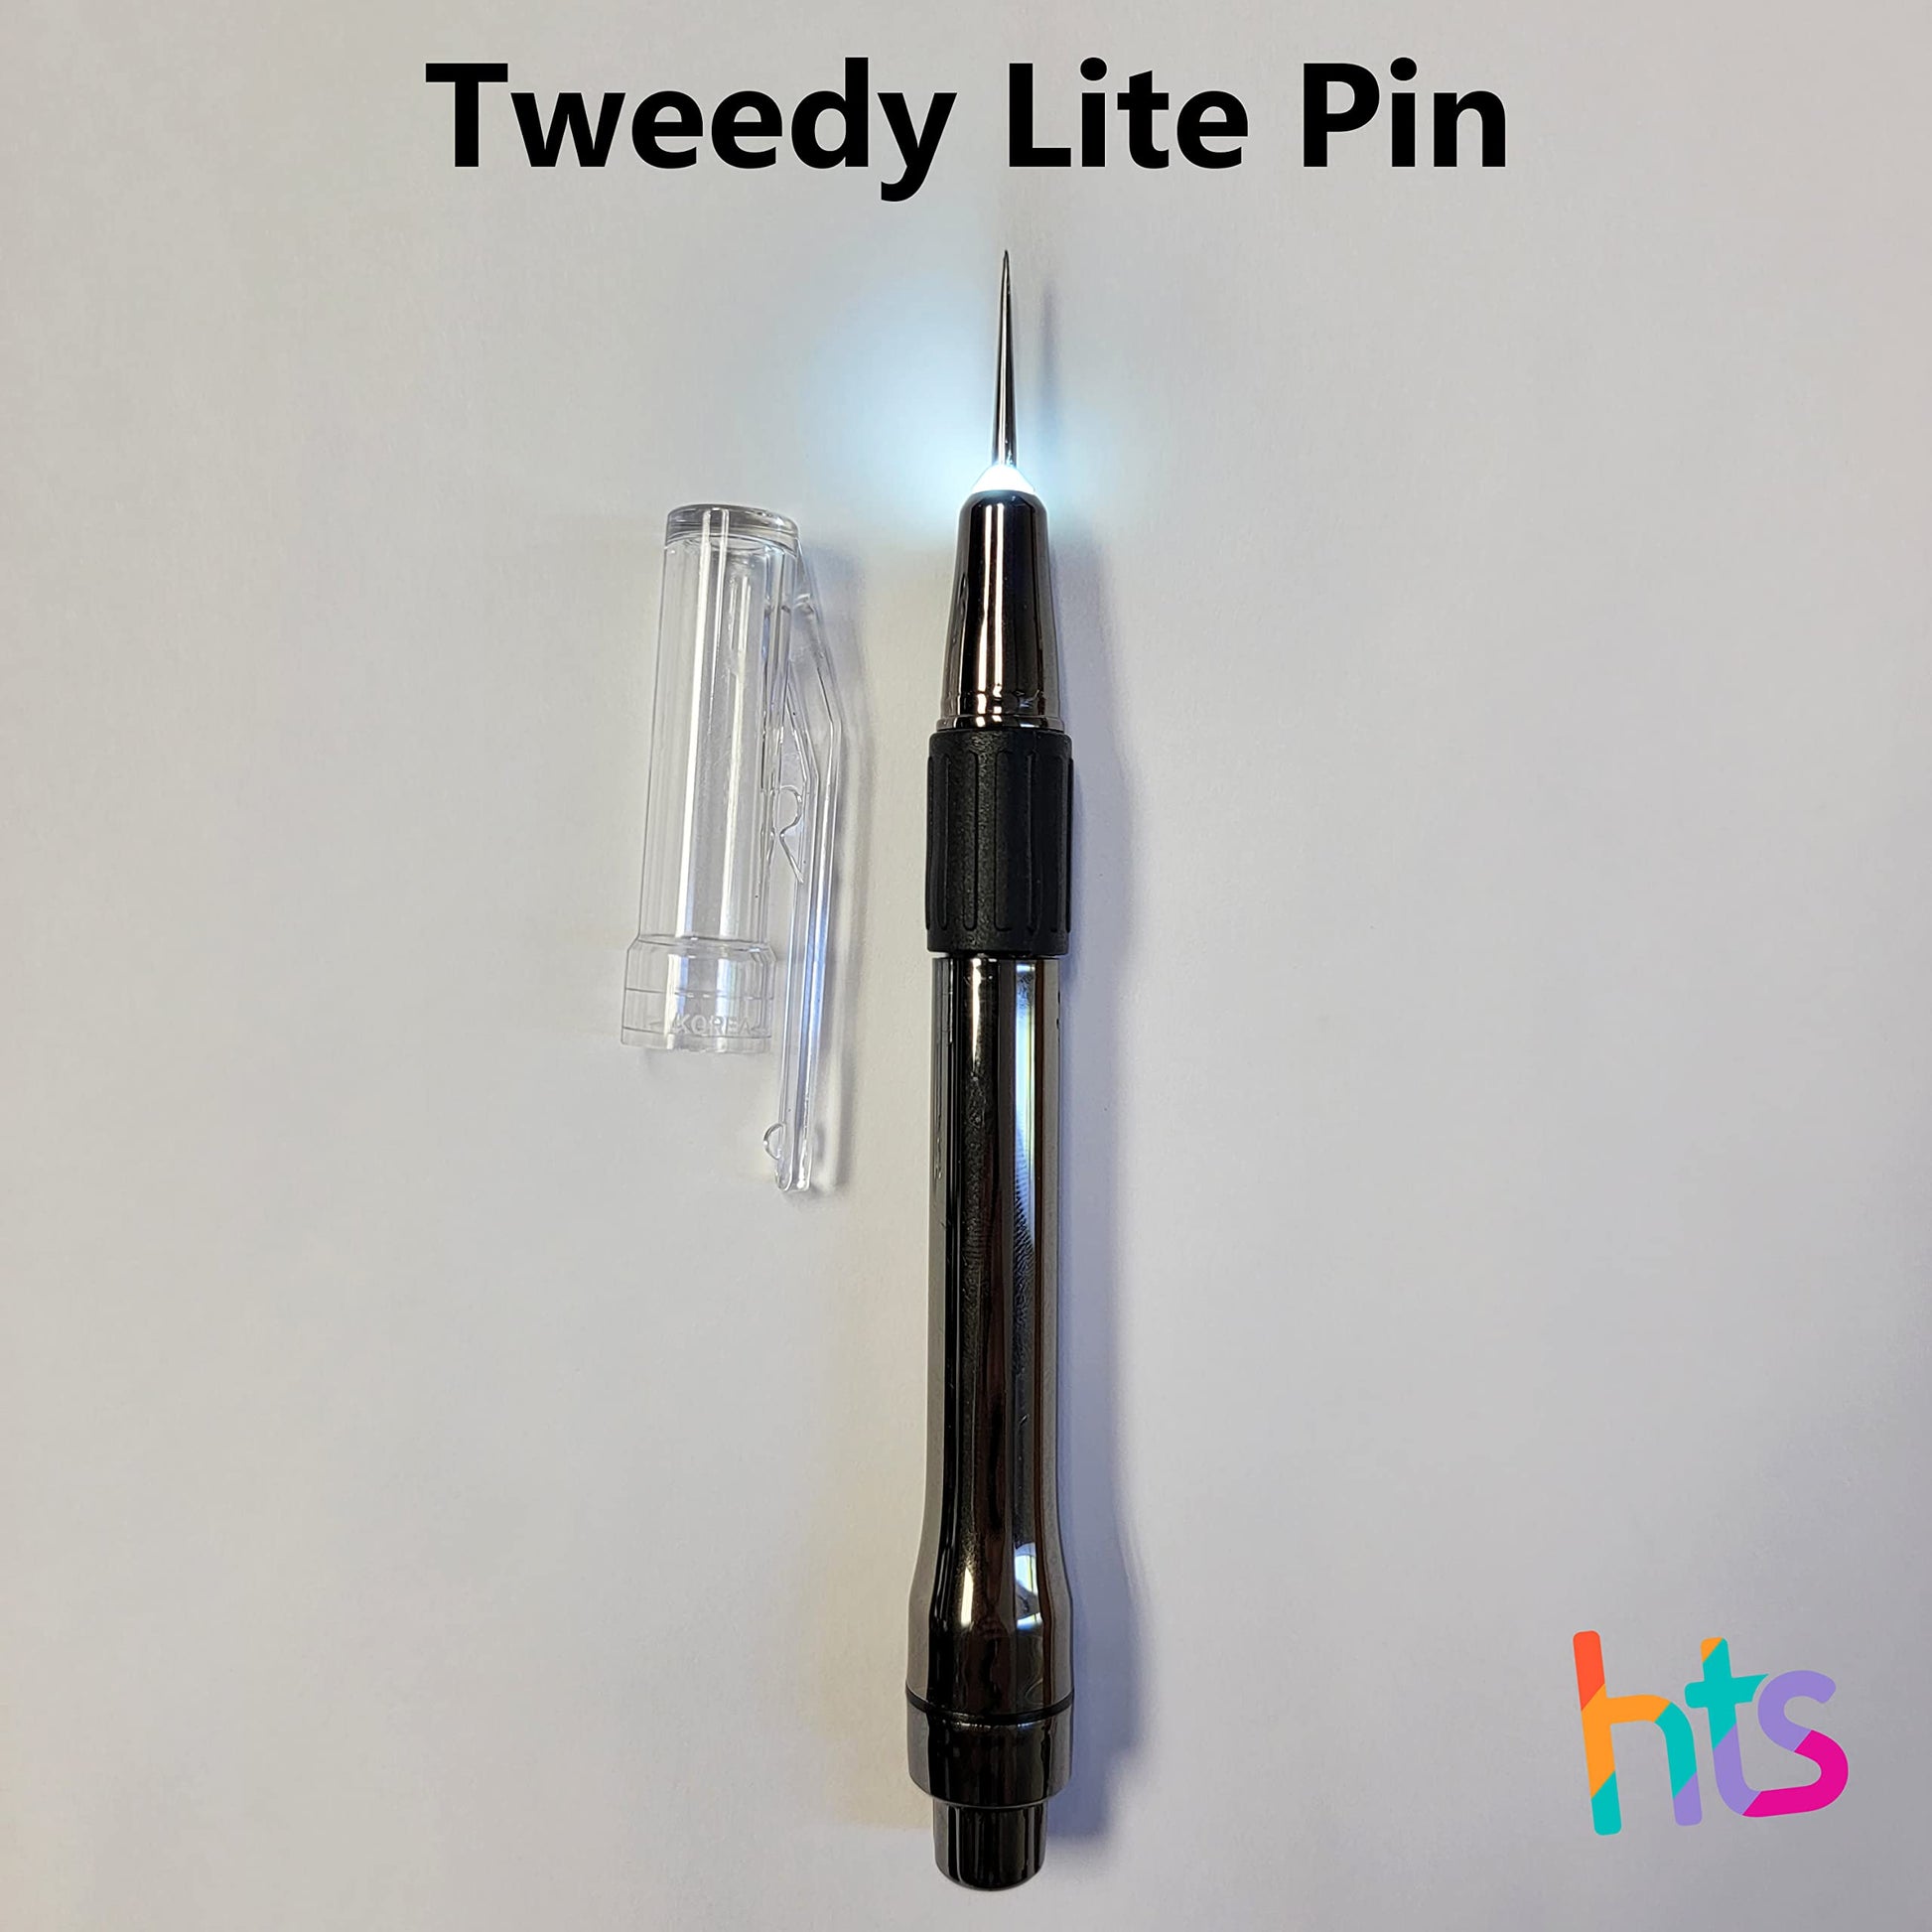 3 Pcs Weeding Tools for Vinyl with LED Light Set Pin Pen Weeding